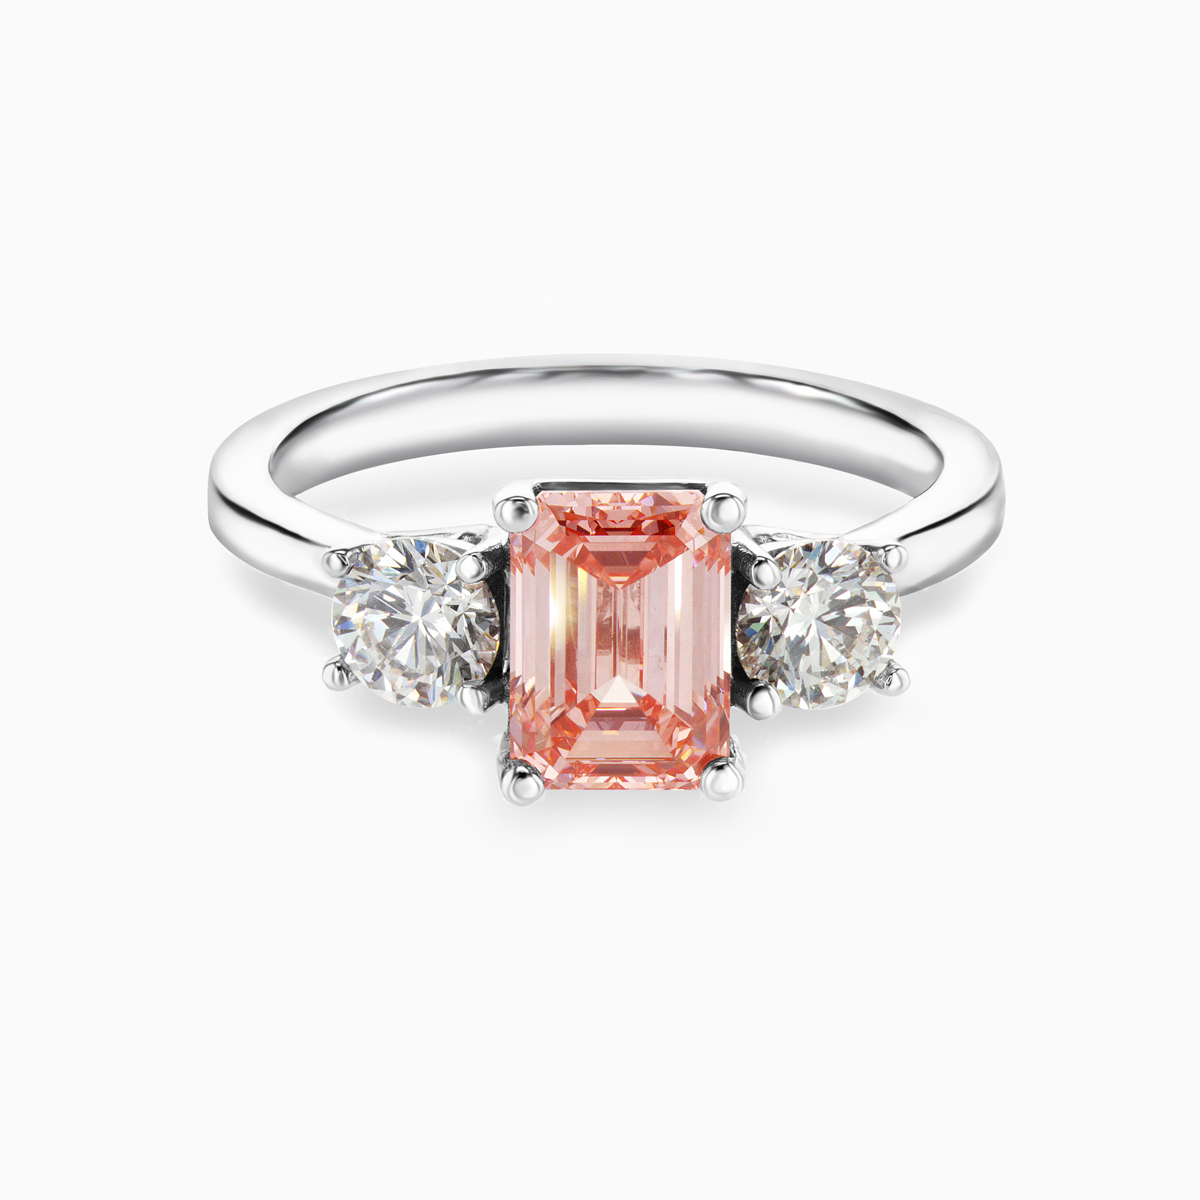 Three-Stone Diamond Engagement Ring with Fancy Pink Emerald Lab-created Diamond, 14k White Gold